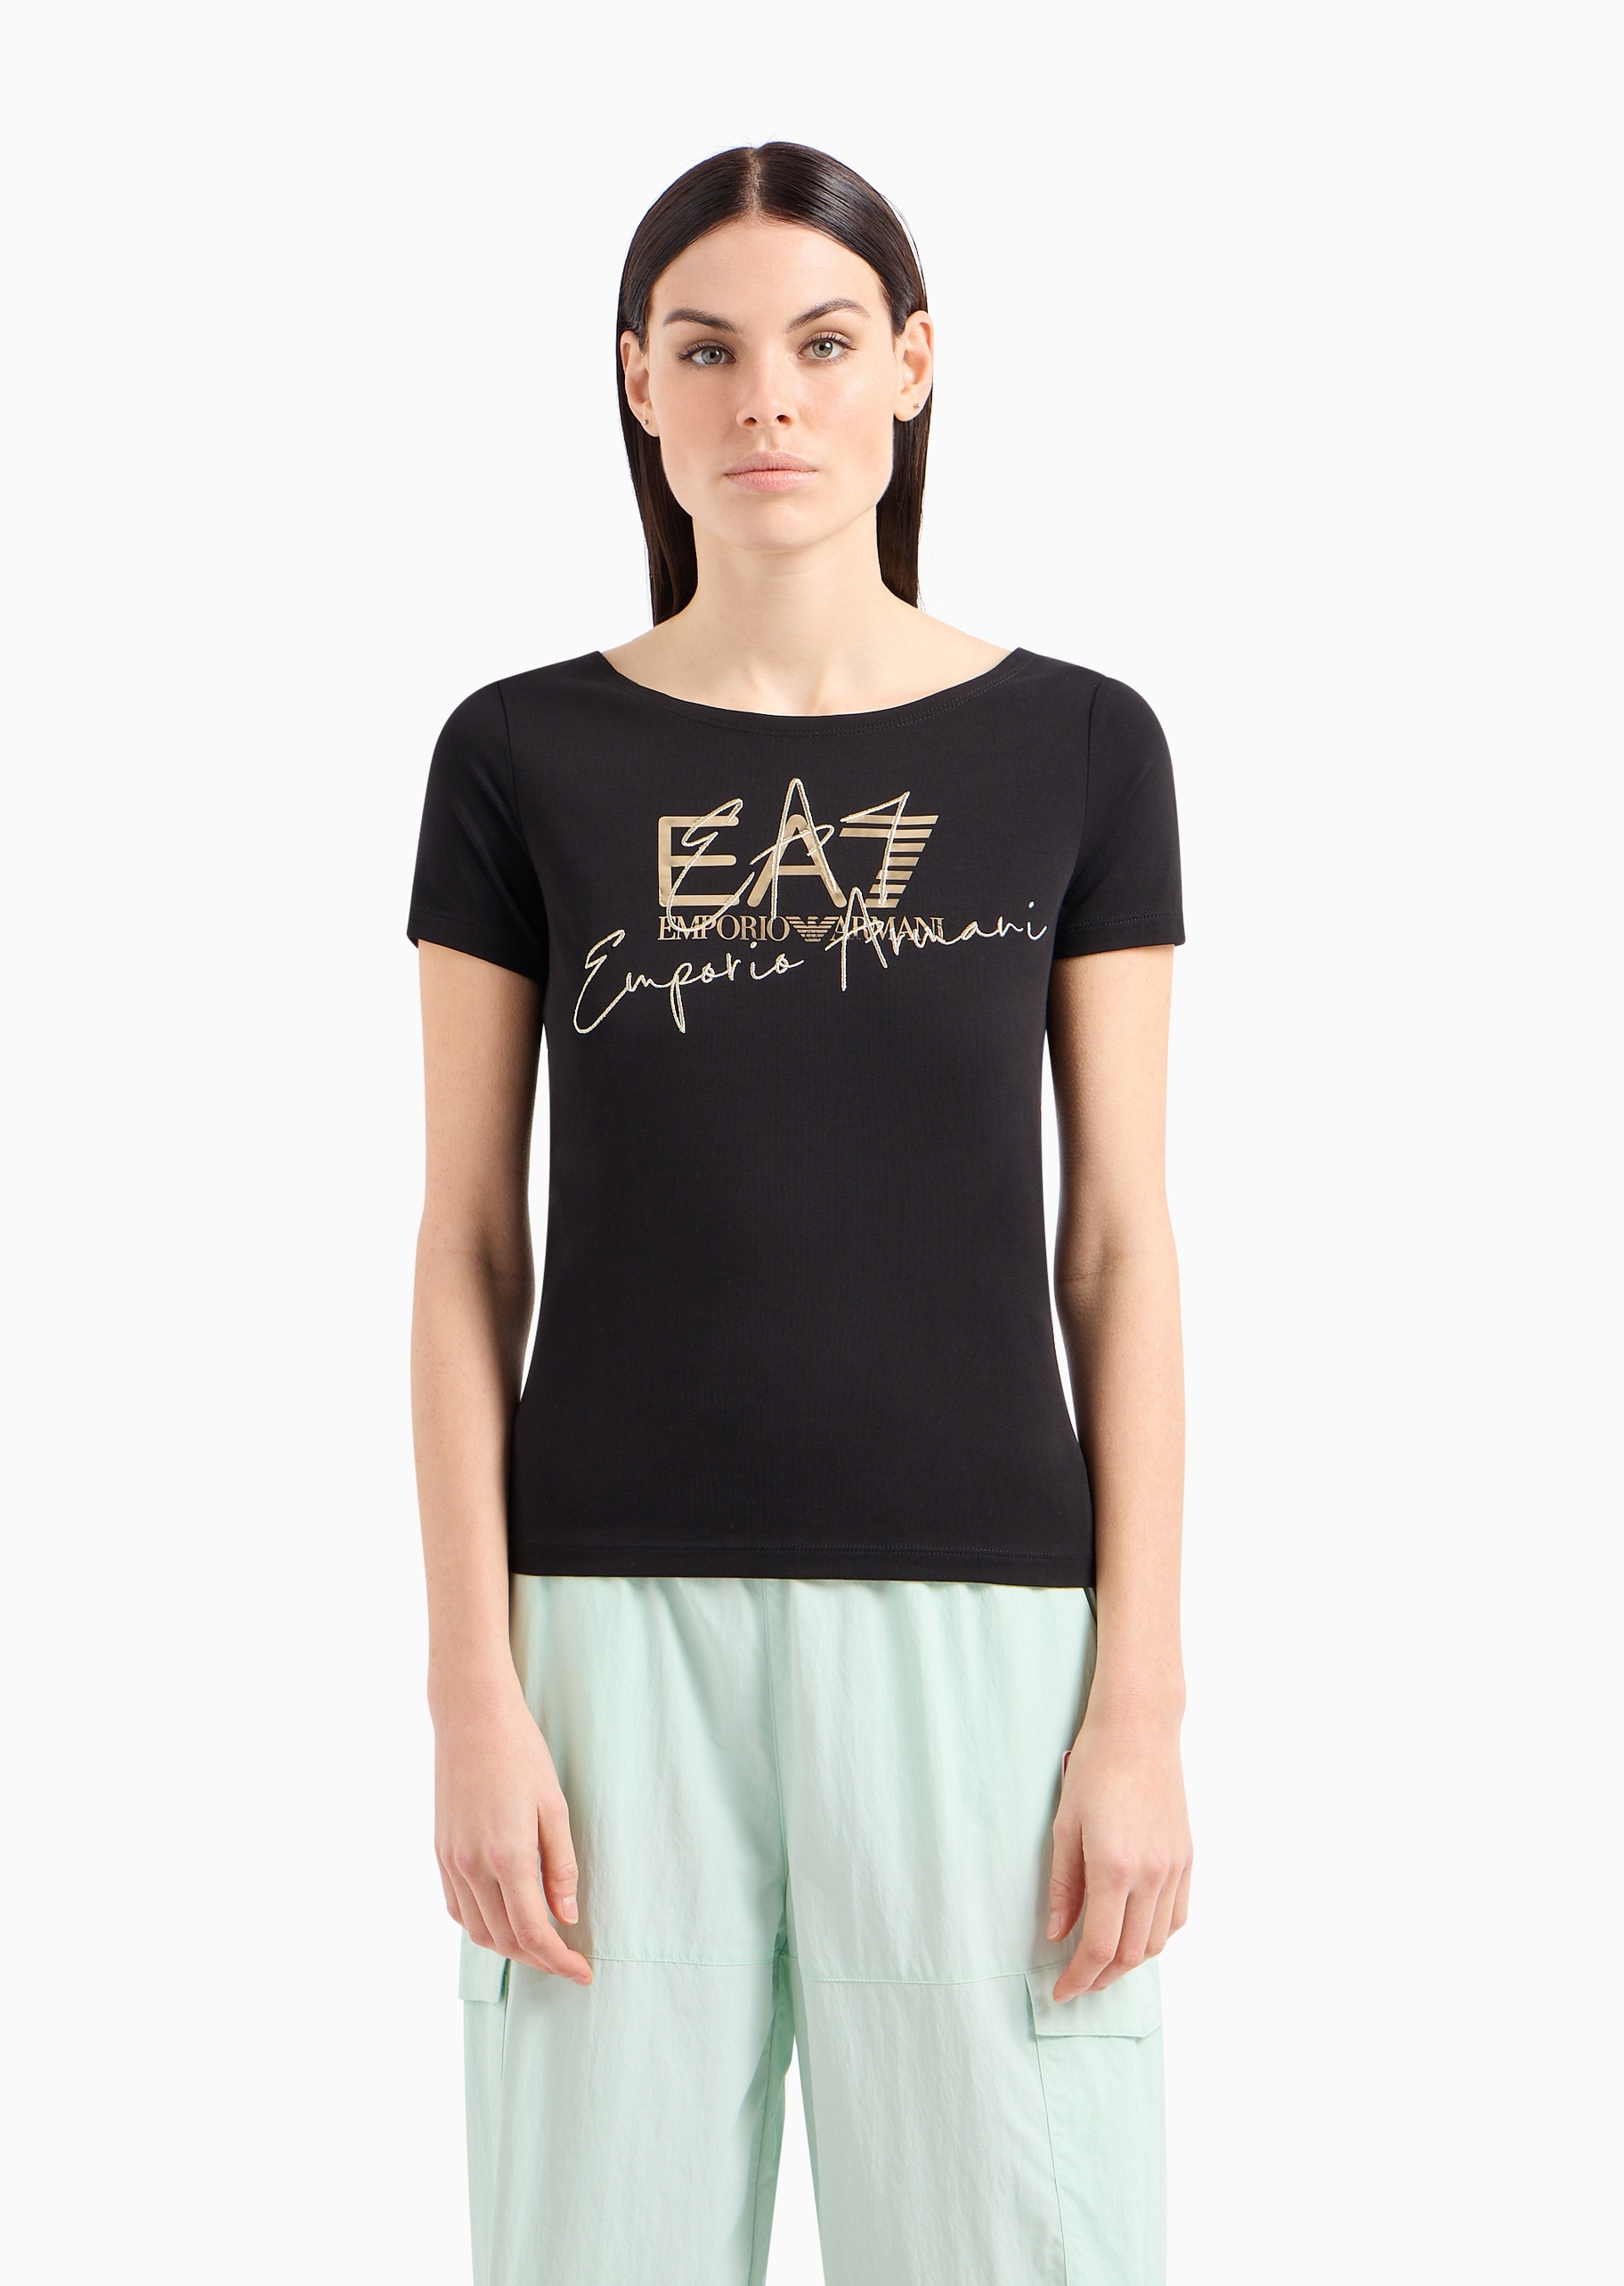 EA7 女士纯棉弹力合身短袖圆领刺绣印花健身T恤